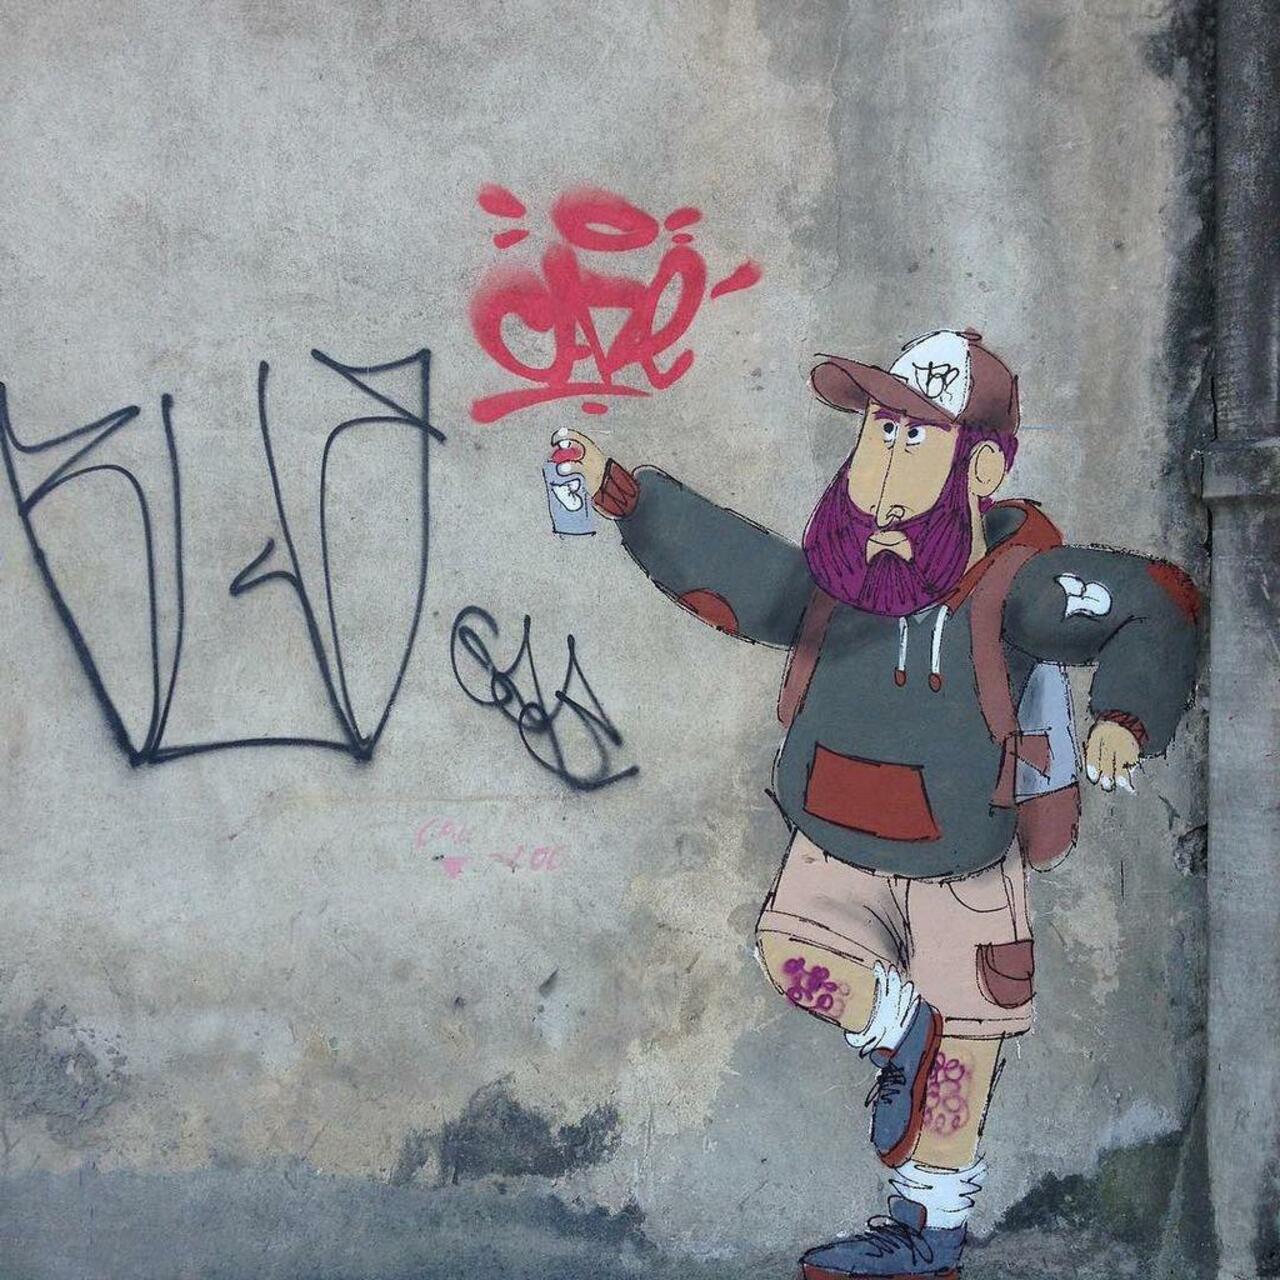 Cazé! #cazesawaya #barbudinhoo #streetart #streetartrio #streetartphoto #charactergraffiti #graffiti #ink #spray #l… http://t.co/JowVIRjJsp